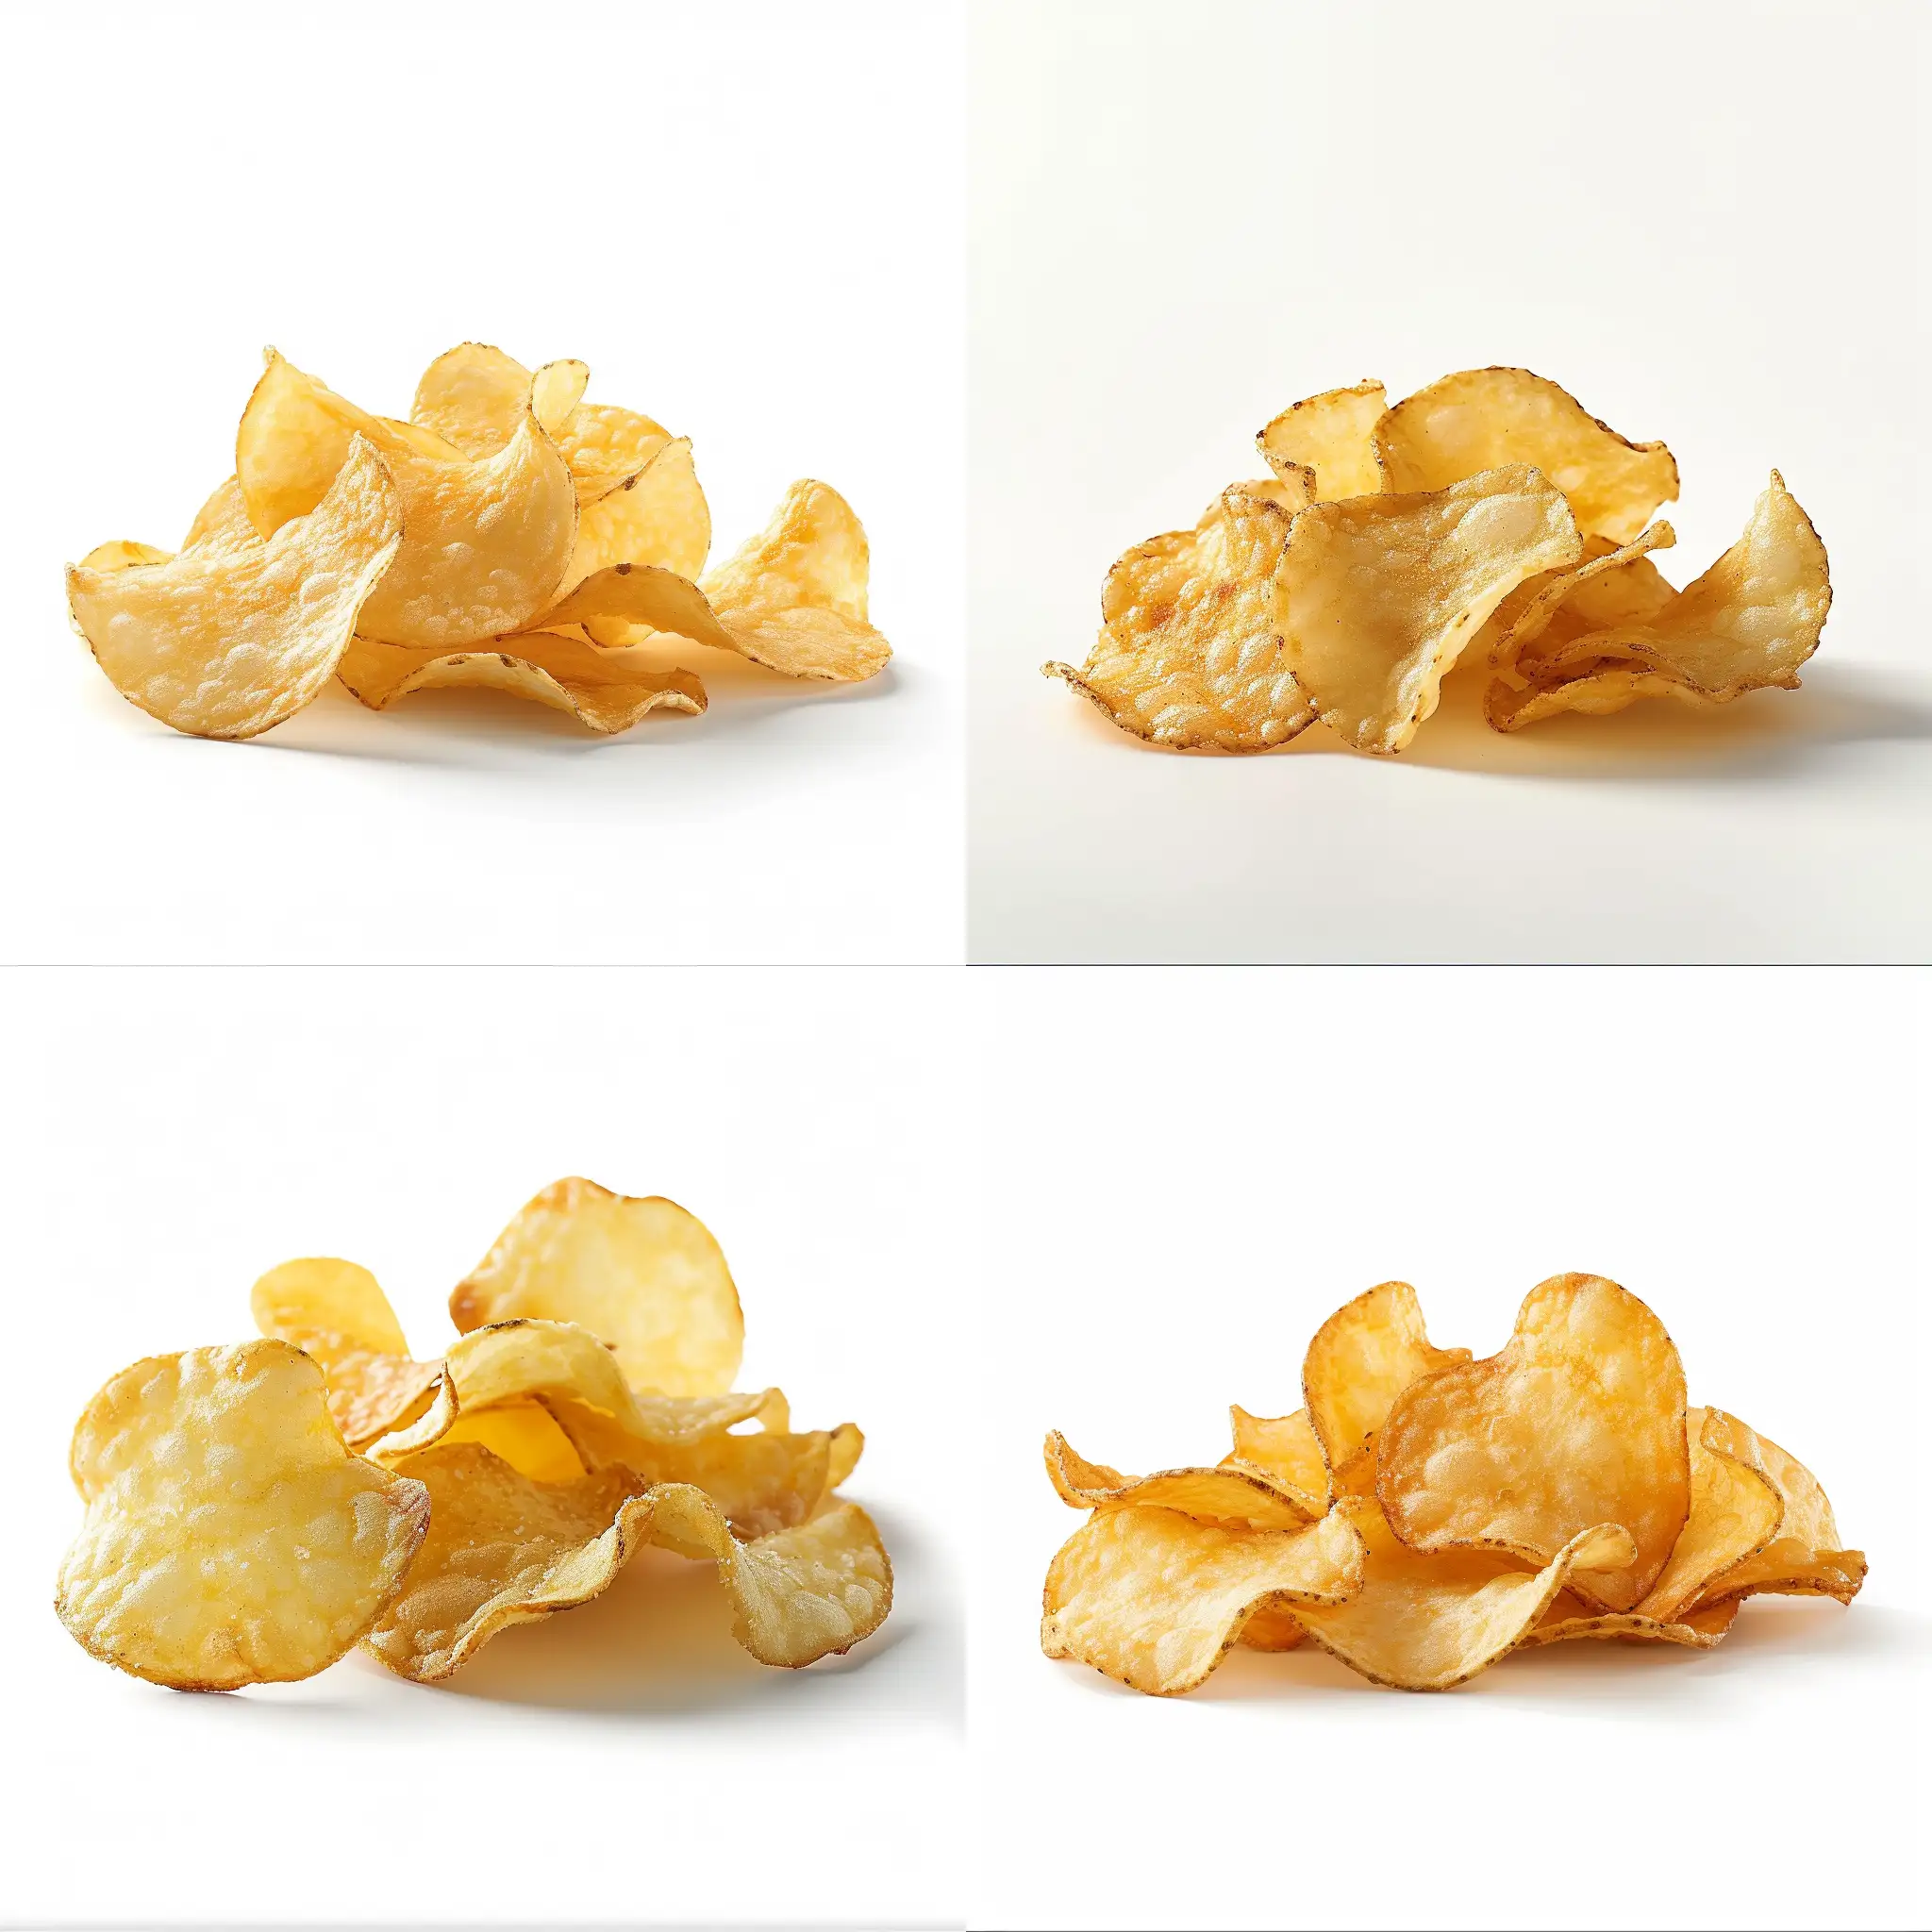 Crunchy-Potato-Chips-Arrangement-Captivating-Front-View-on-White-Background